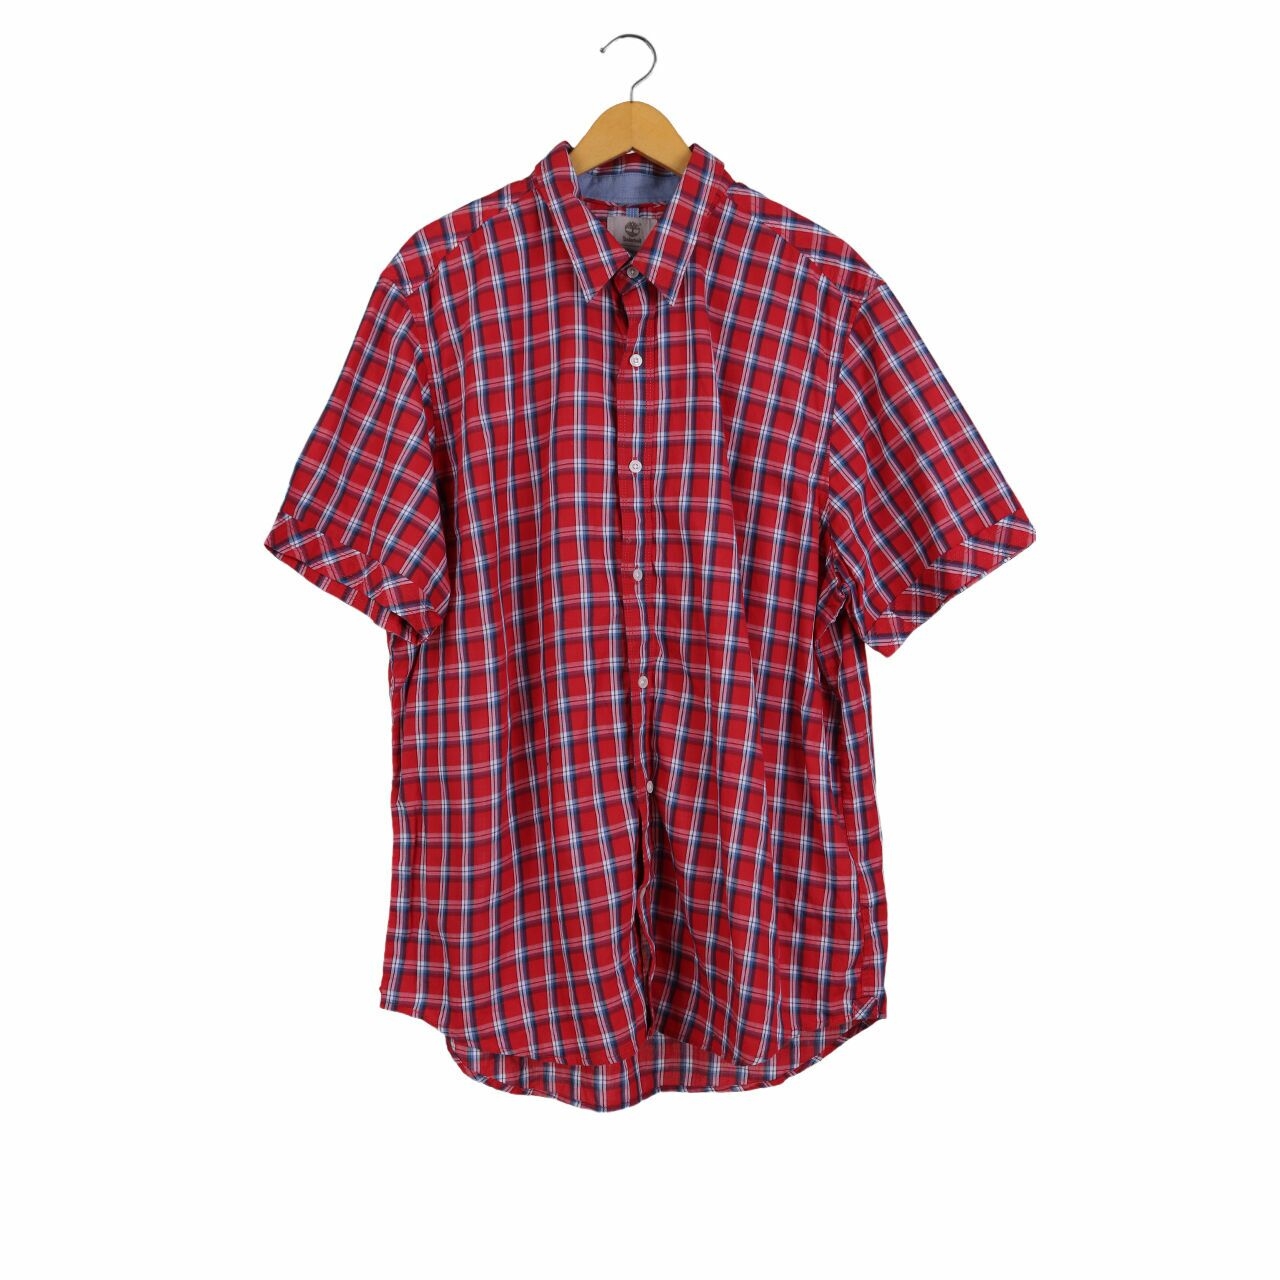 Timberland Red & Multi Plaid Shirt